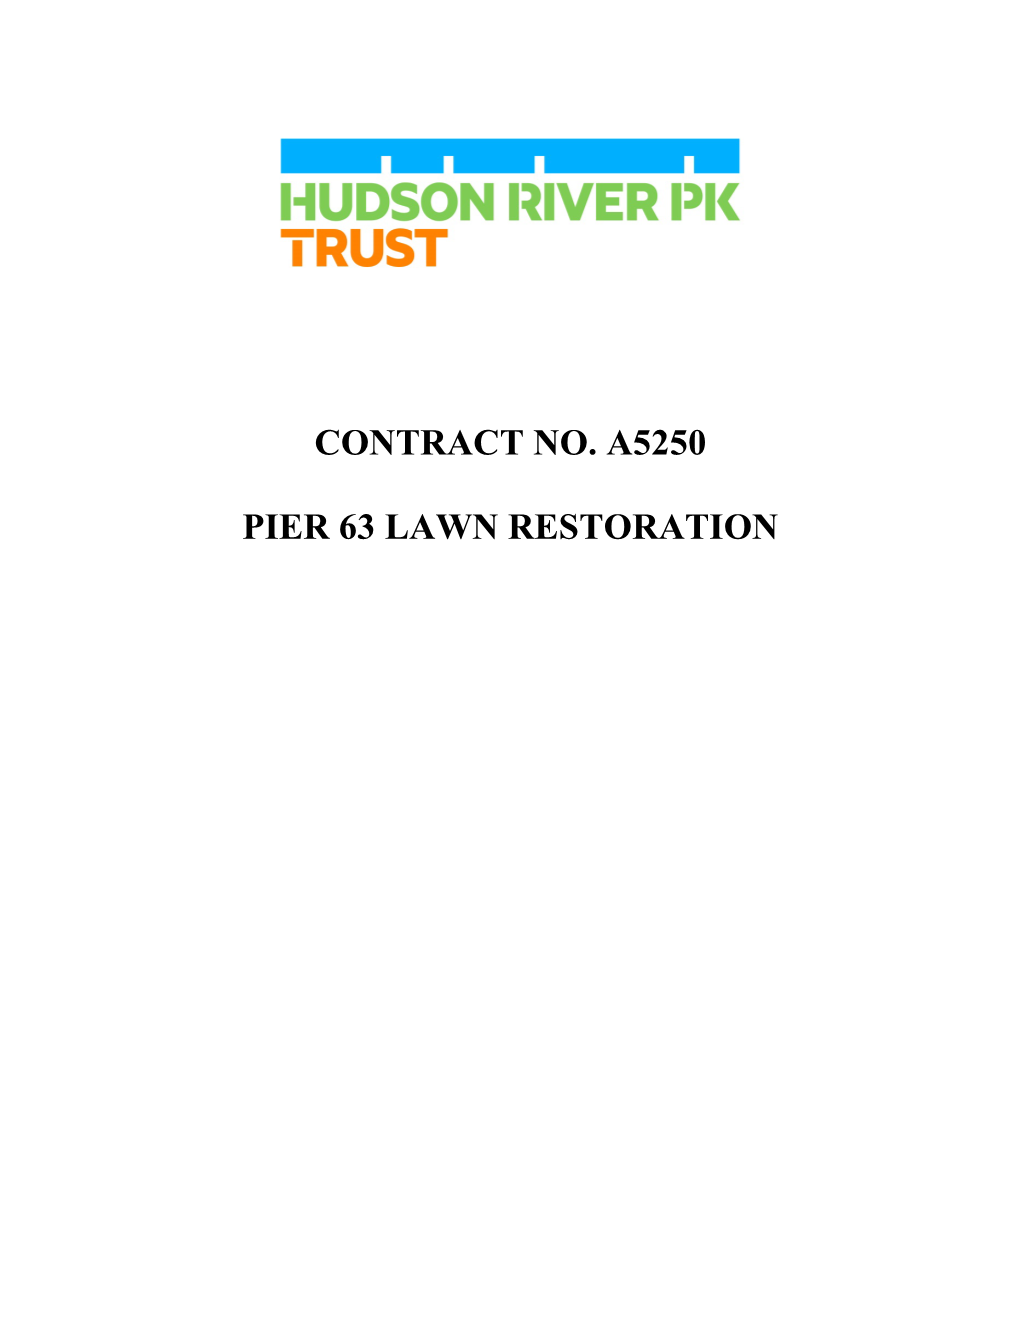 Contract No. A5250 Pier 63 Lawn Restoration